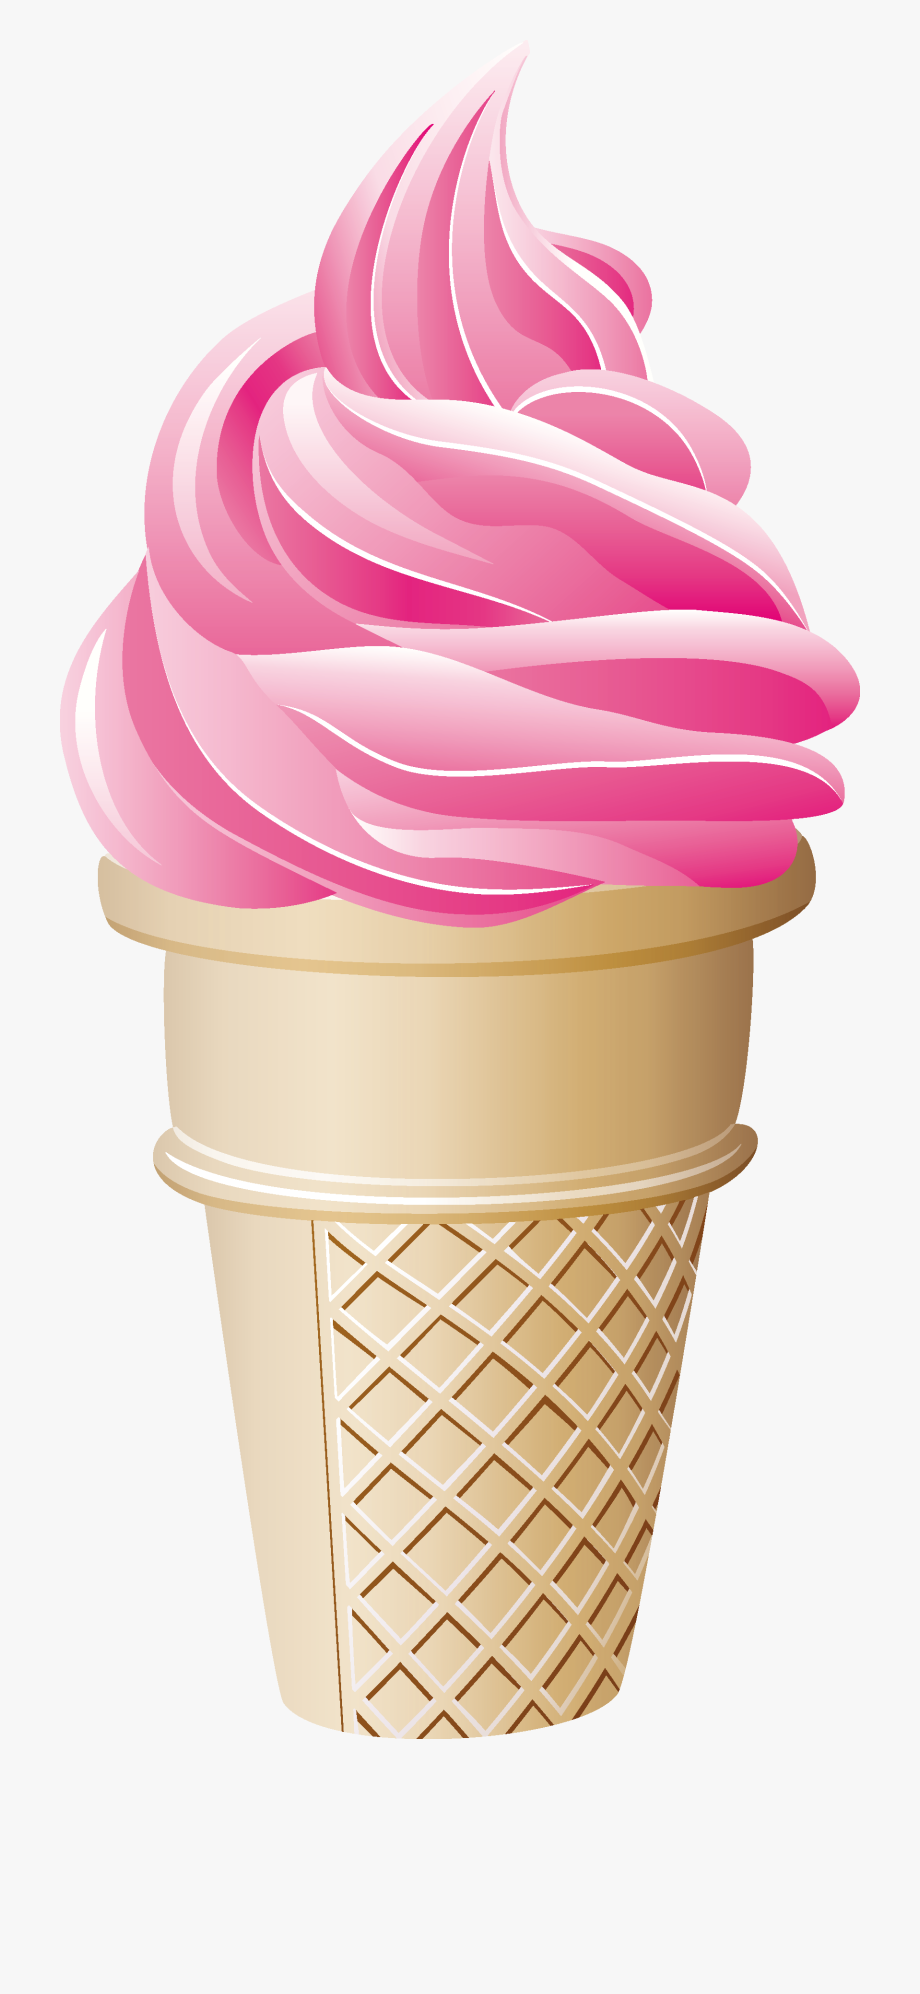 Ice Cream Png Image.